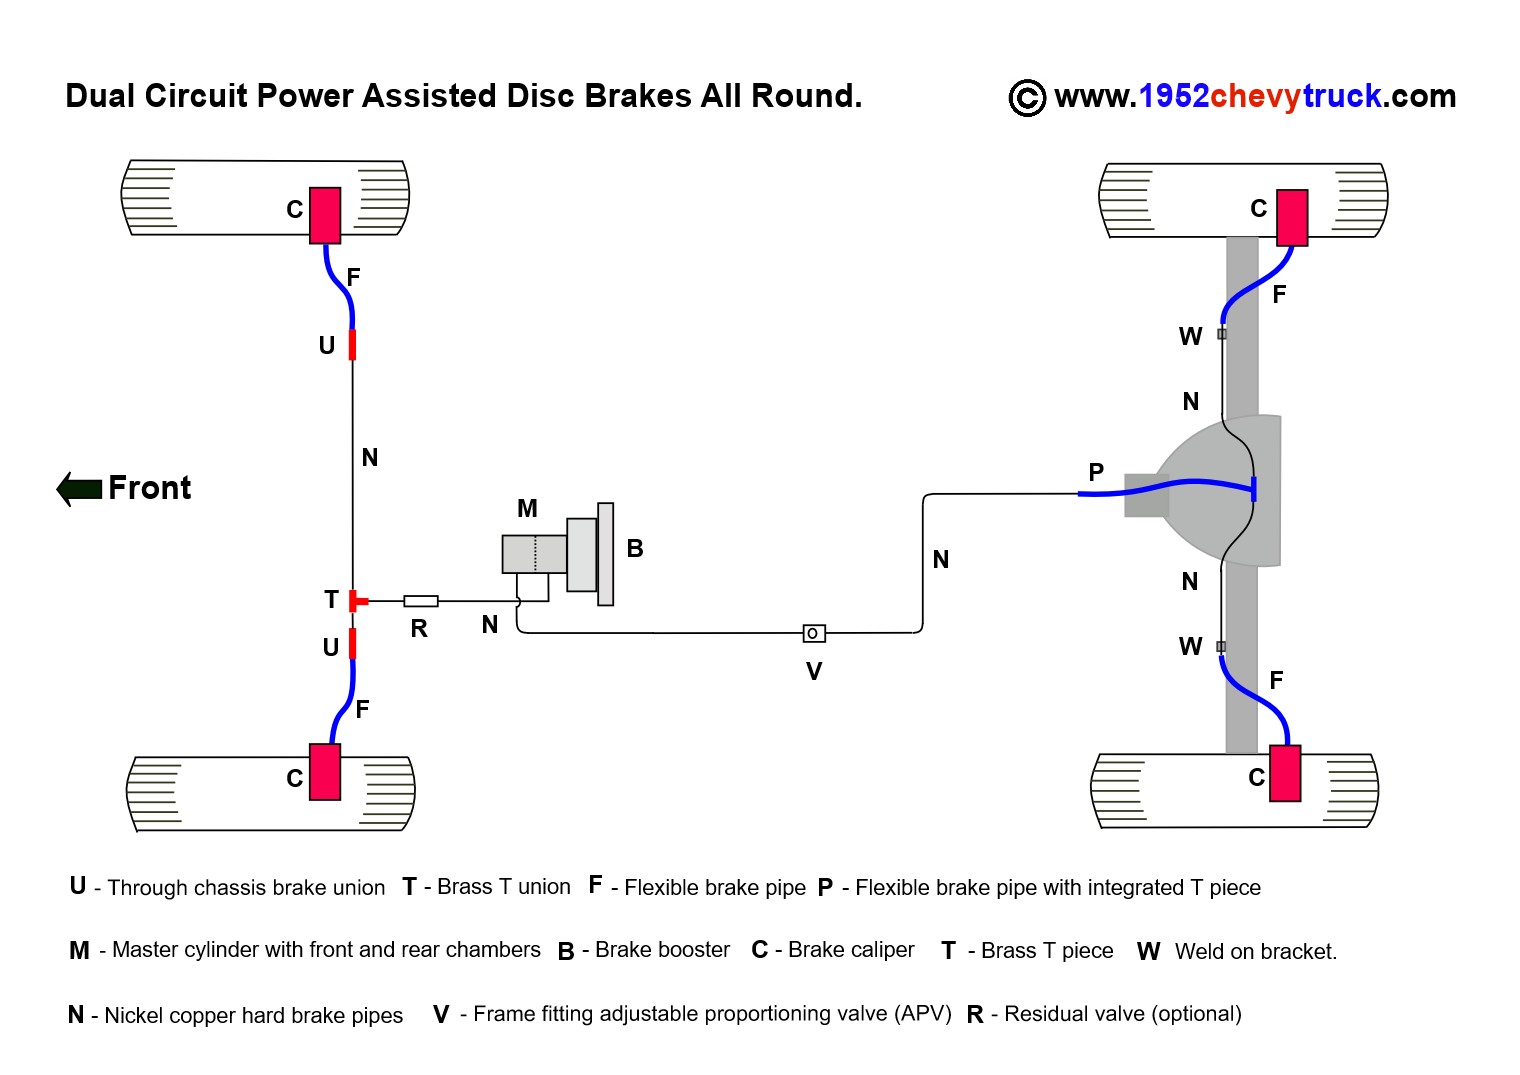 Diagram of dual circuit brakes on truck.